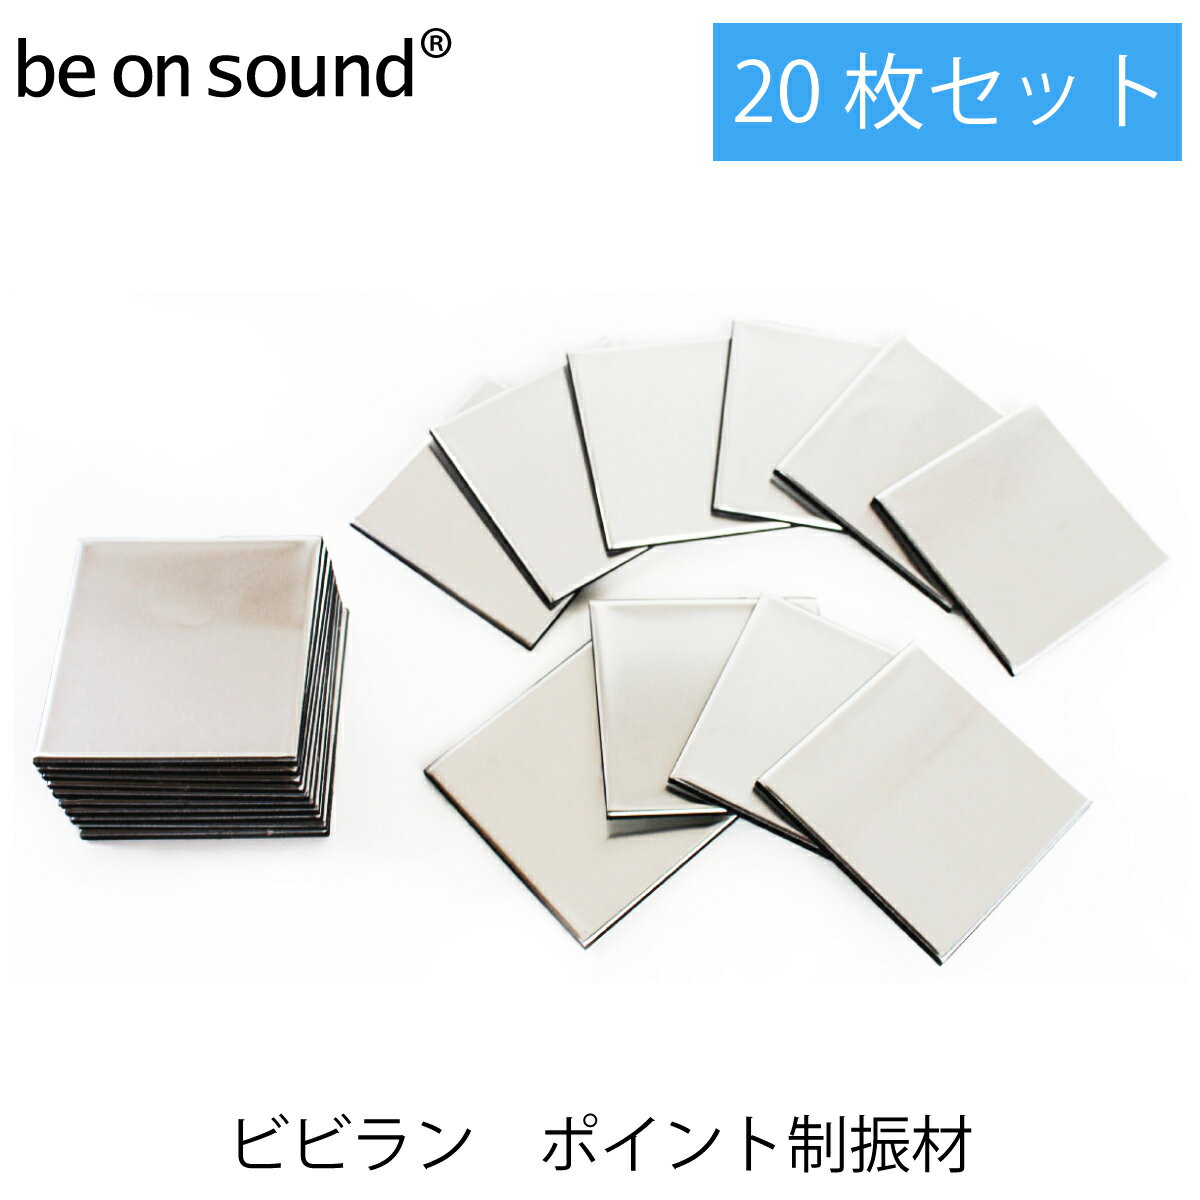 be on sound(美音サウンド) 美音ビビラン 20枚セット ポイント制振材 bbrn-20